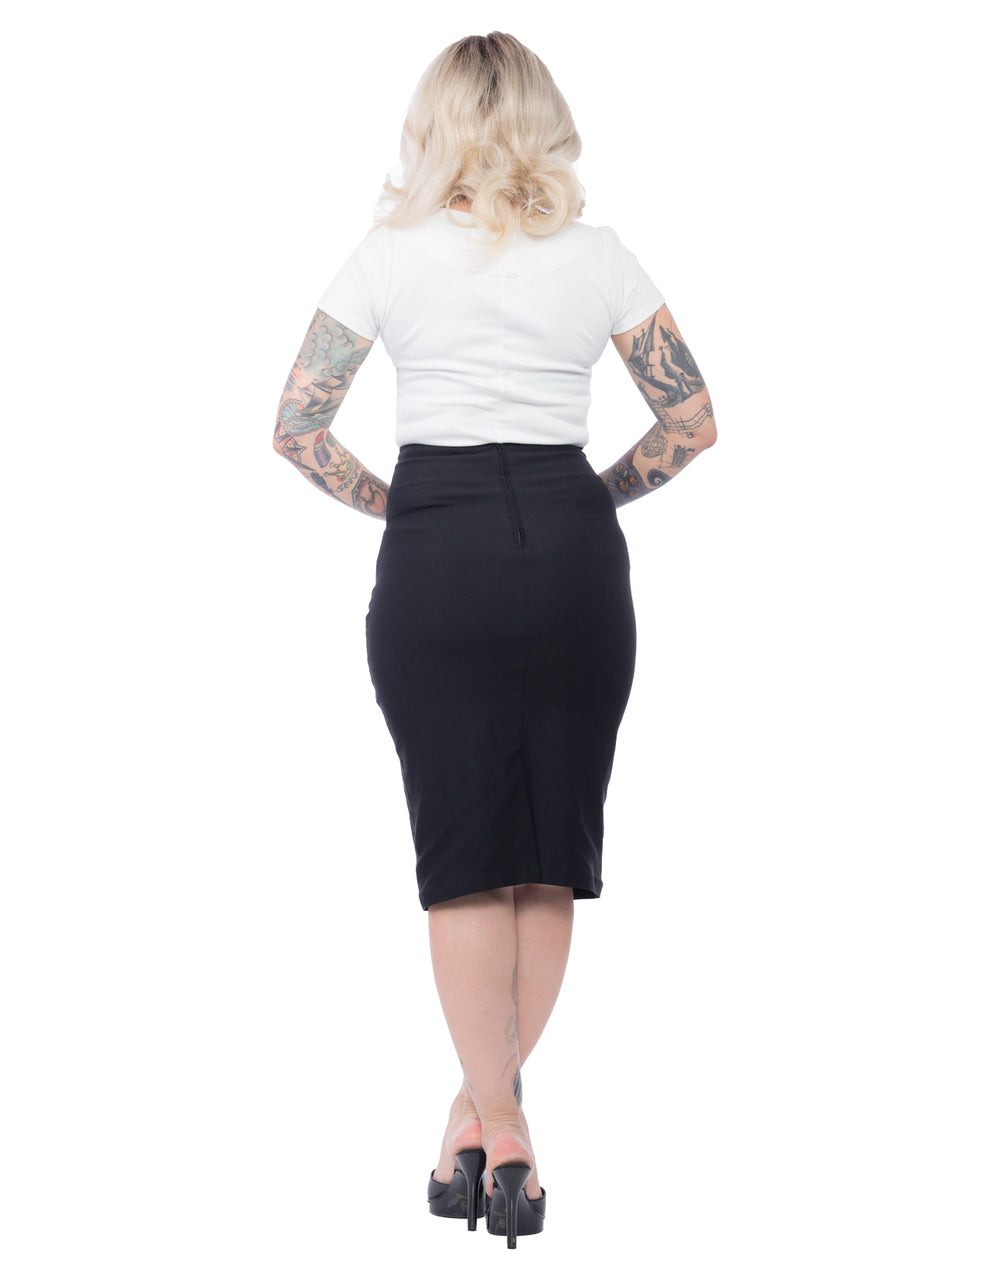 Vivian Wiggle Skirt in Black/White